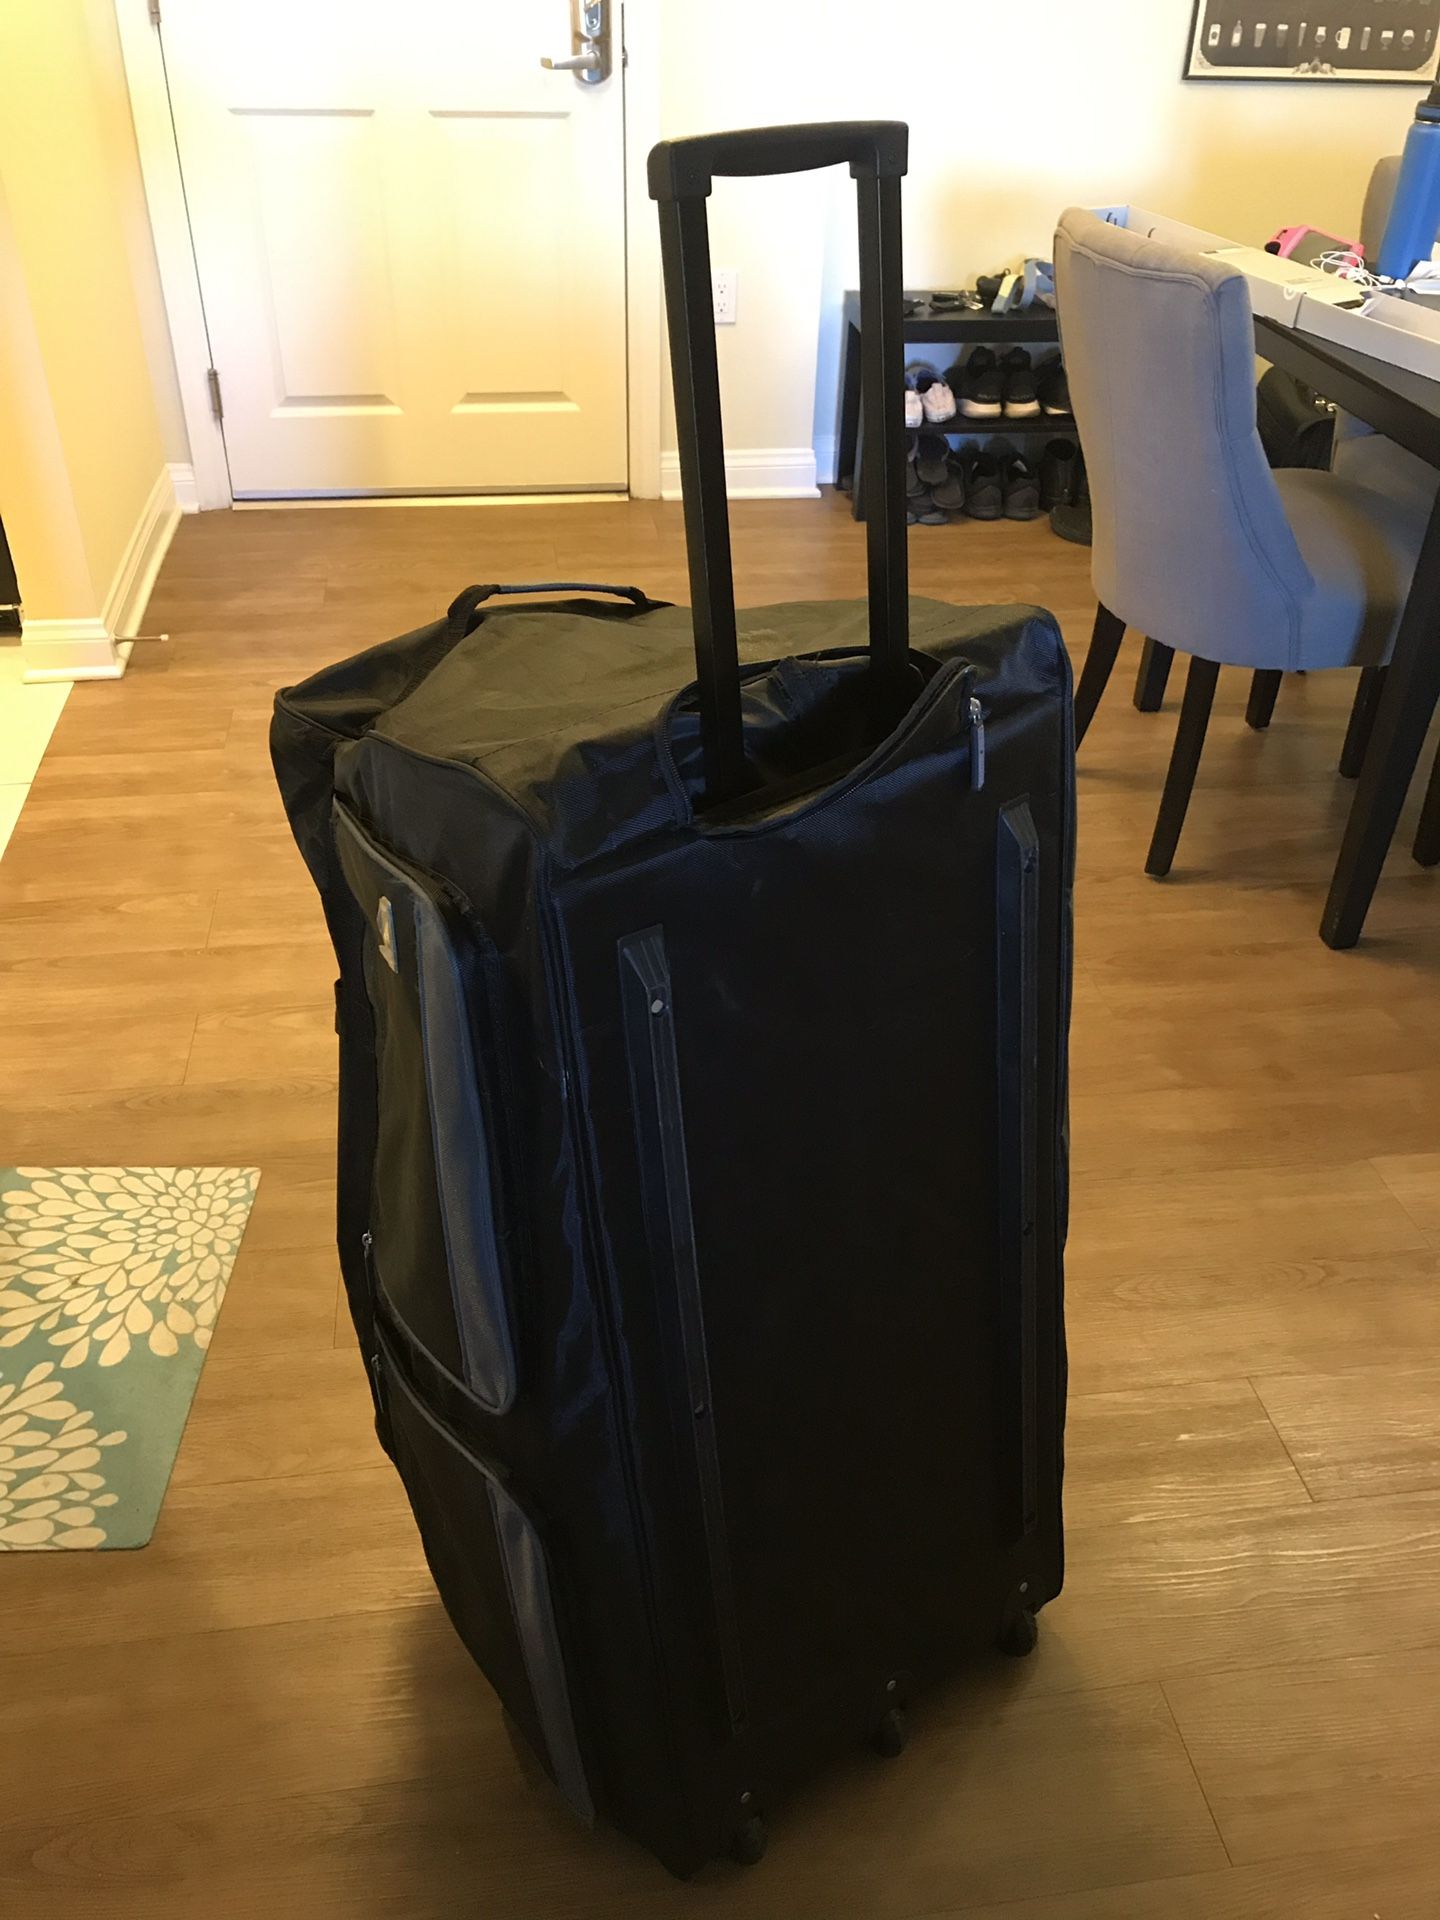 Duffle bag luggage’s